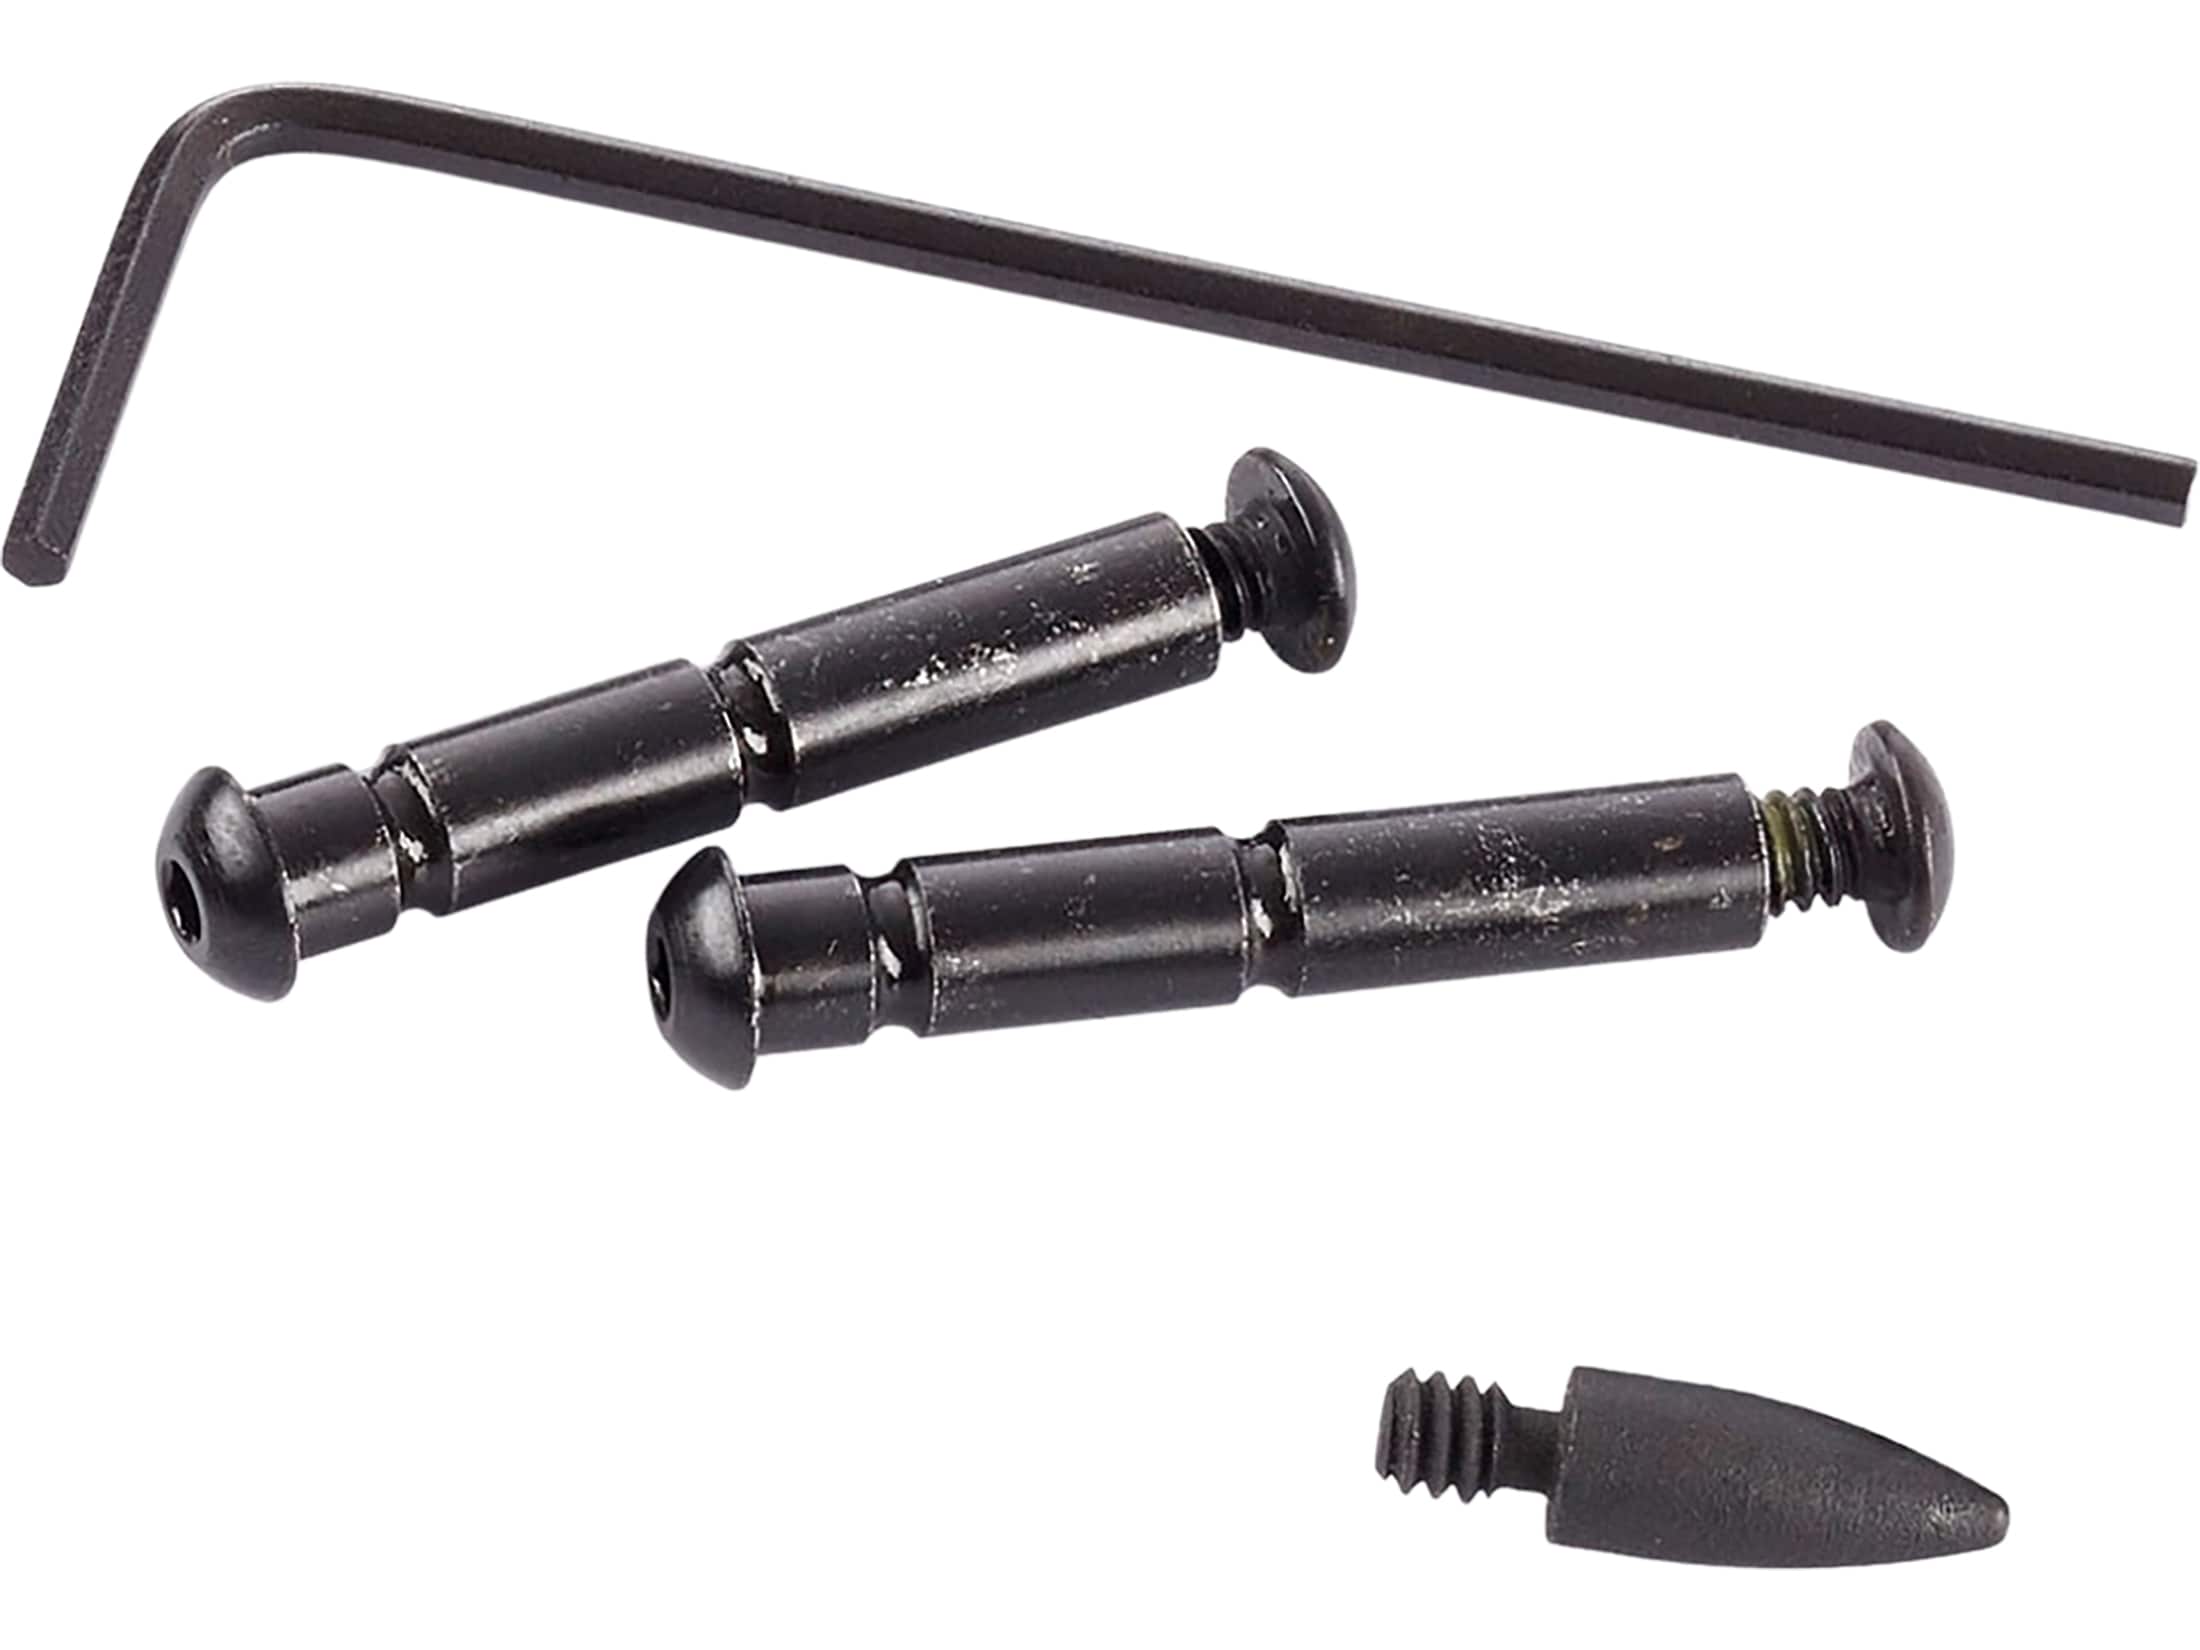 AR15 anti-walk pin set for AR-15 lower receivers